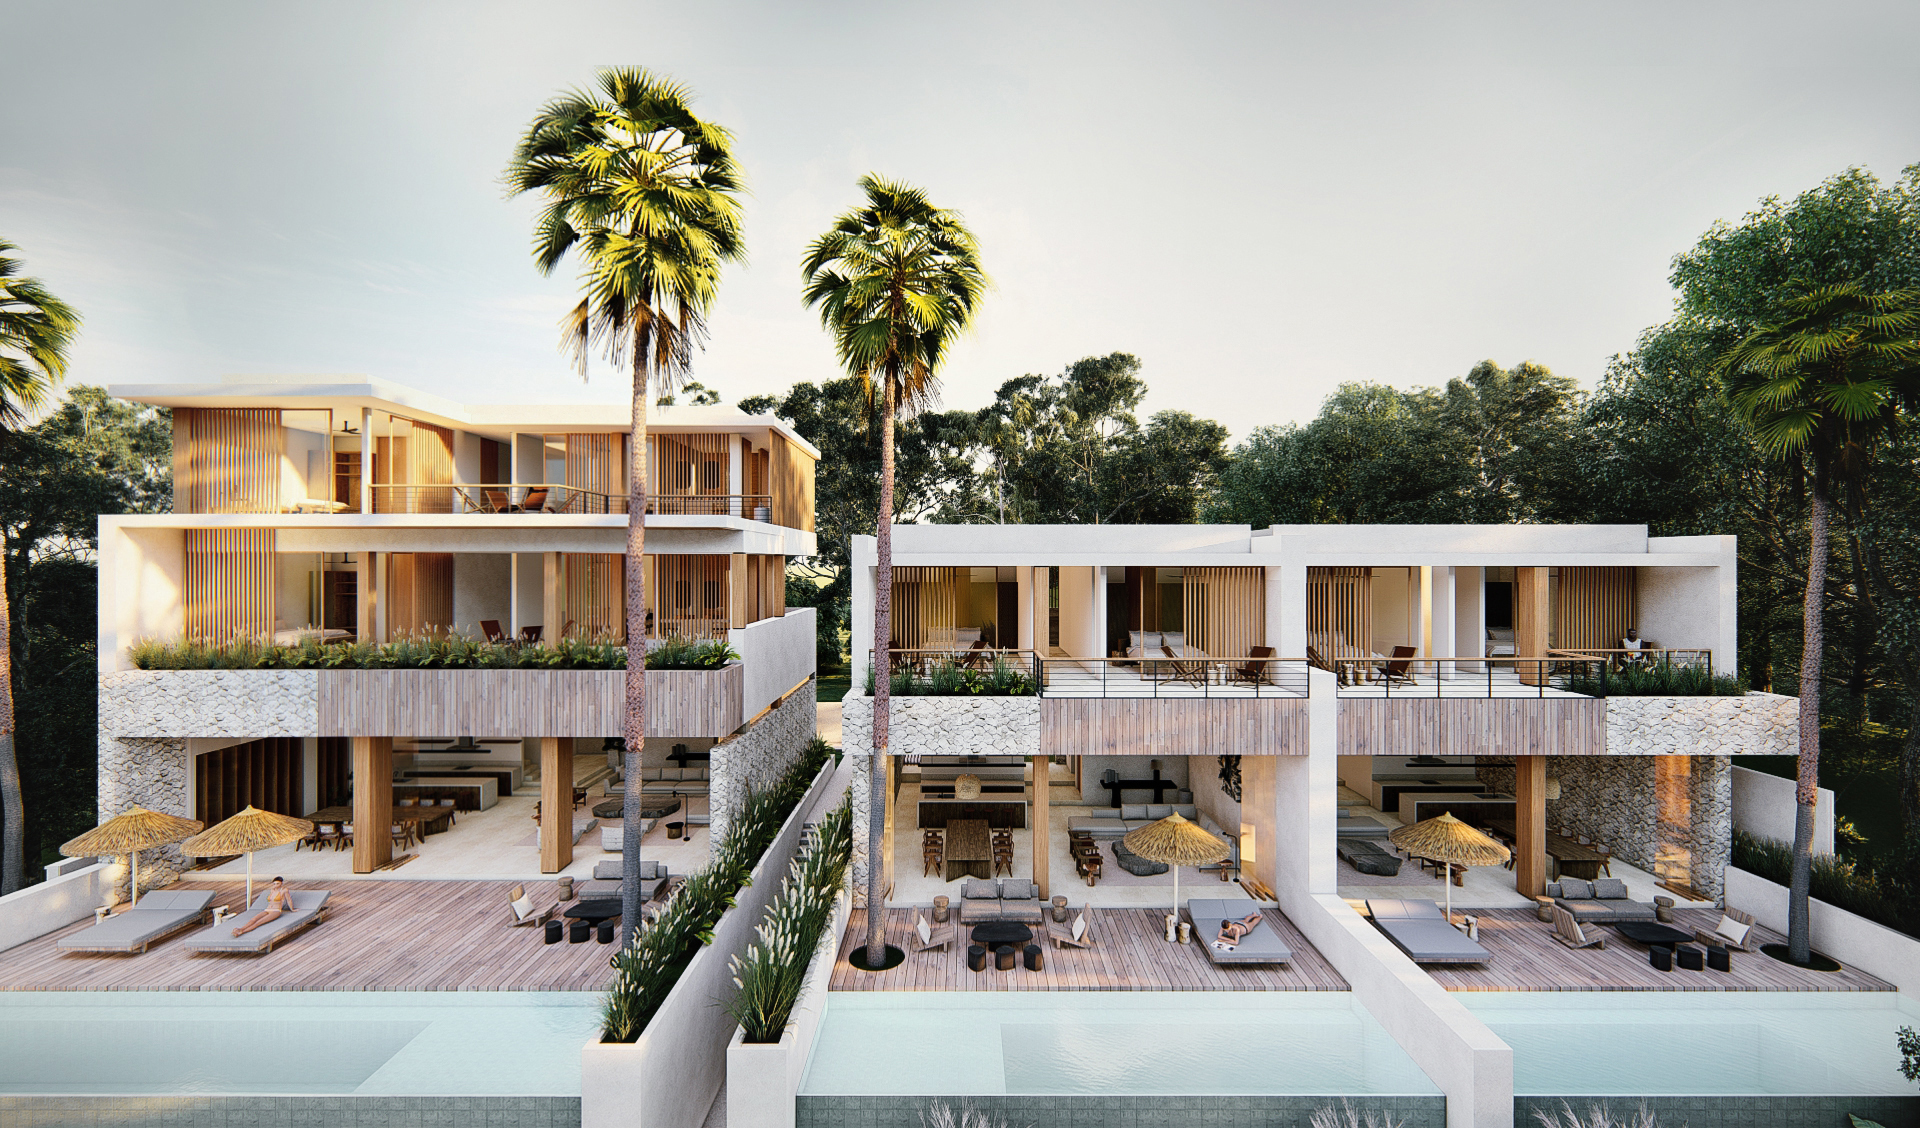 Design Assembly - Dreamland Villas - Bali Architect - Interior Design - Bali Villa - Building Facade